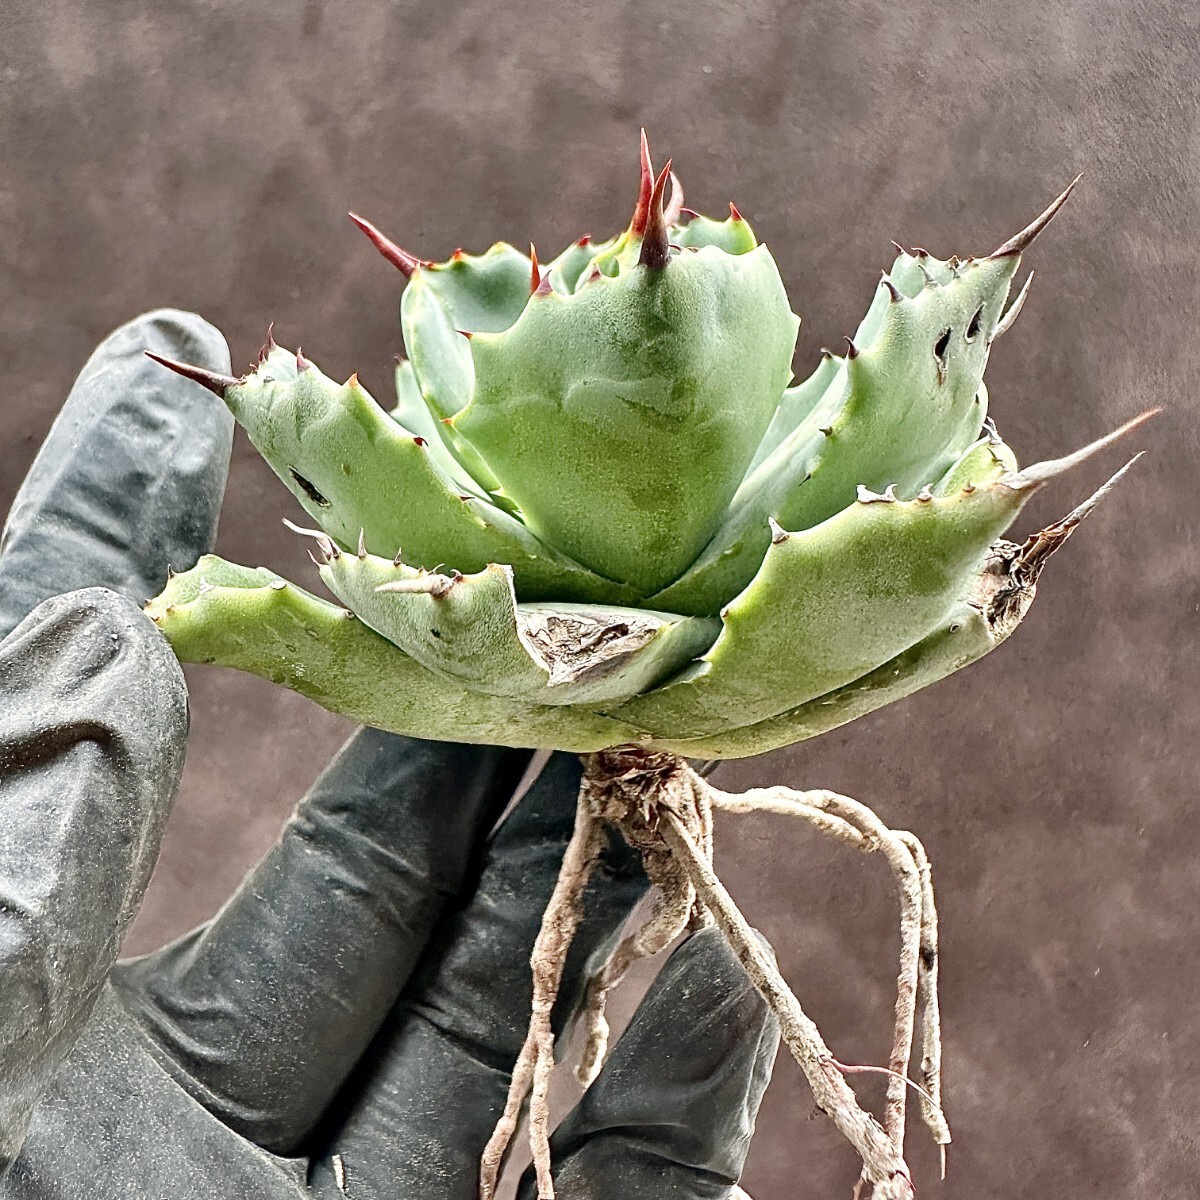  【Lj_plants】W355 アガベ チタノタ 雷帝甲蟹厚葉 丸い叶 コンパクト包葉形 極上美株の画像10